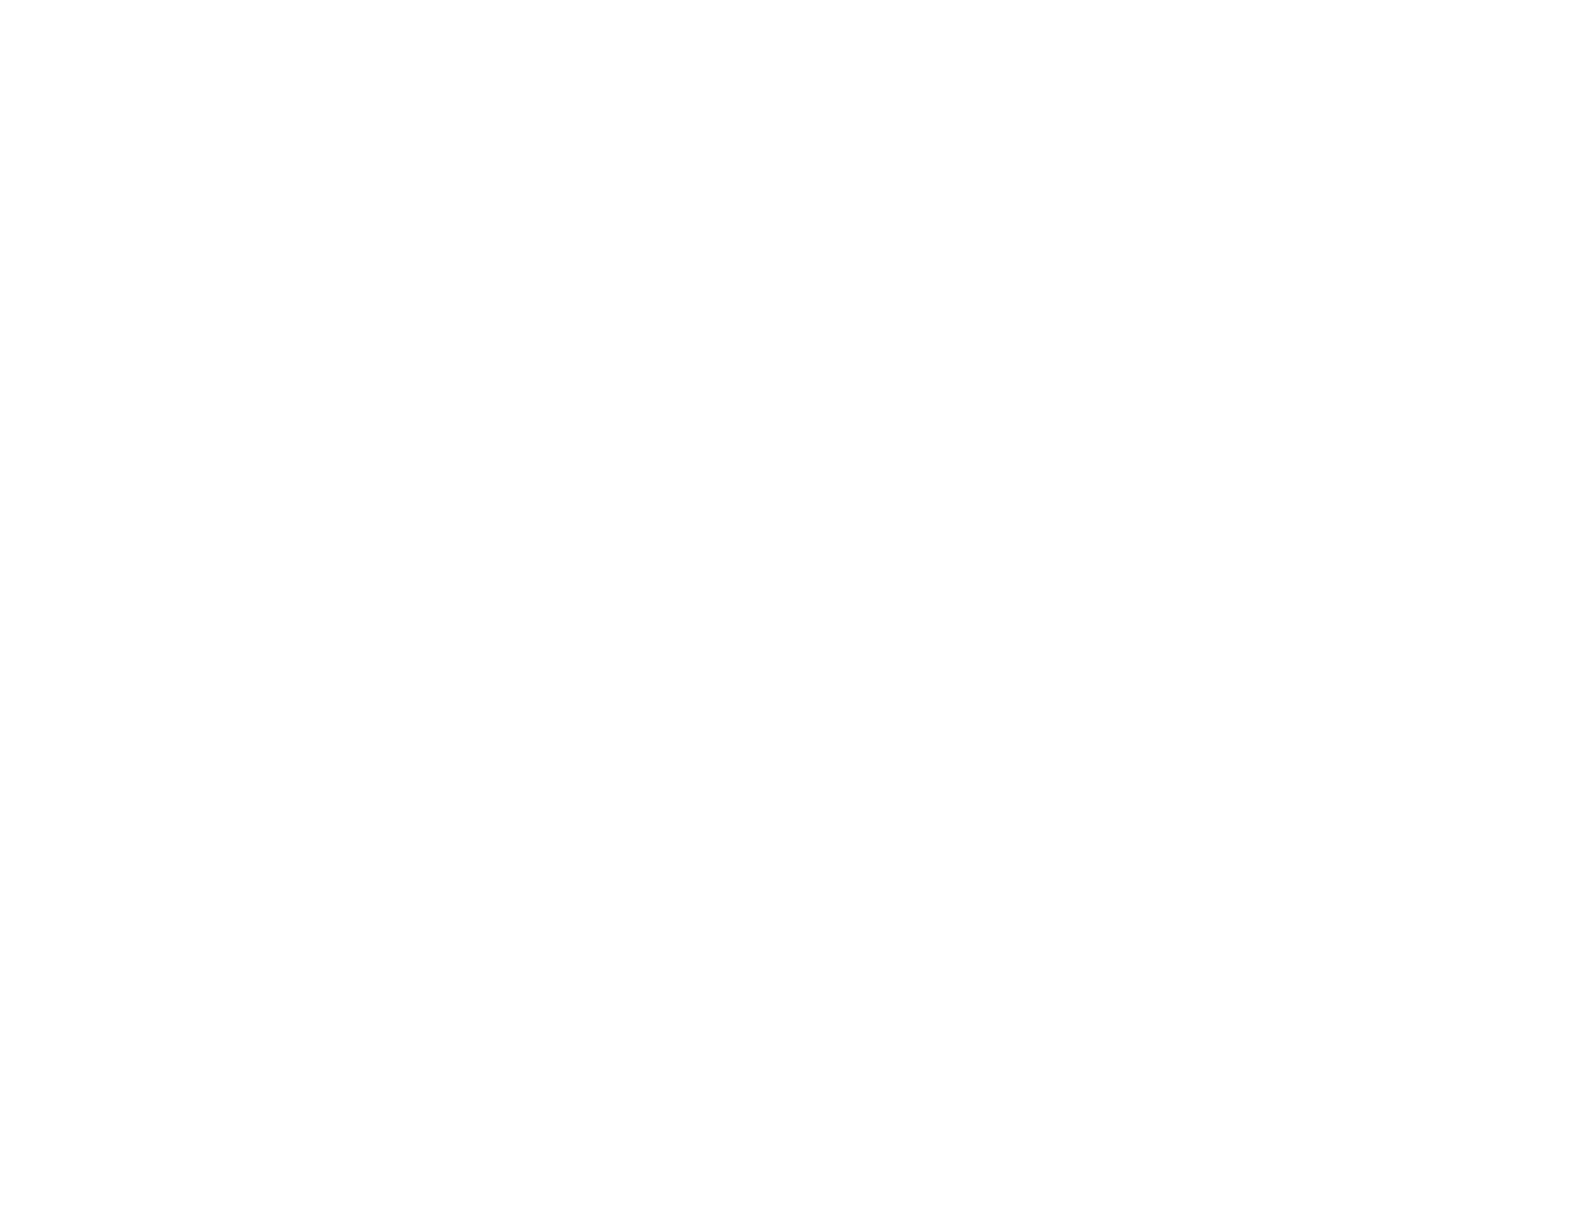 mattel163